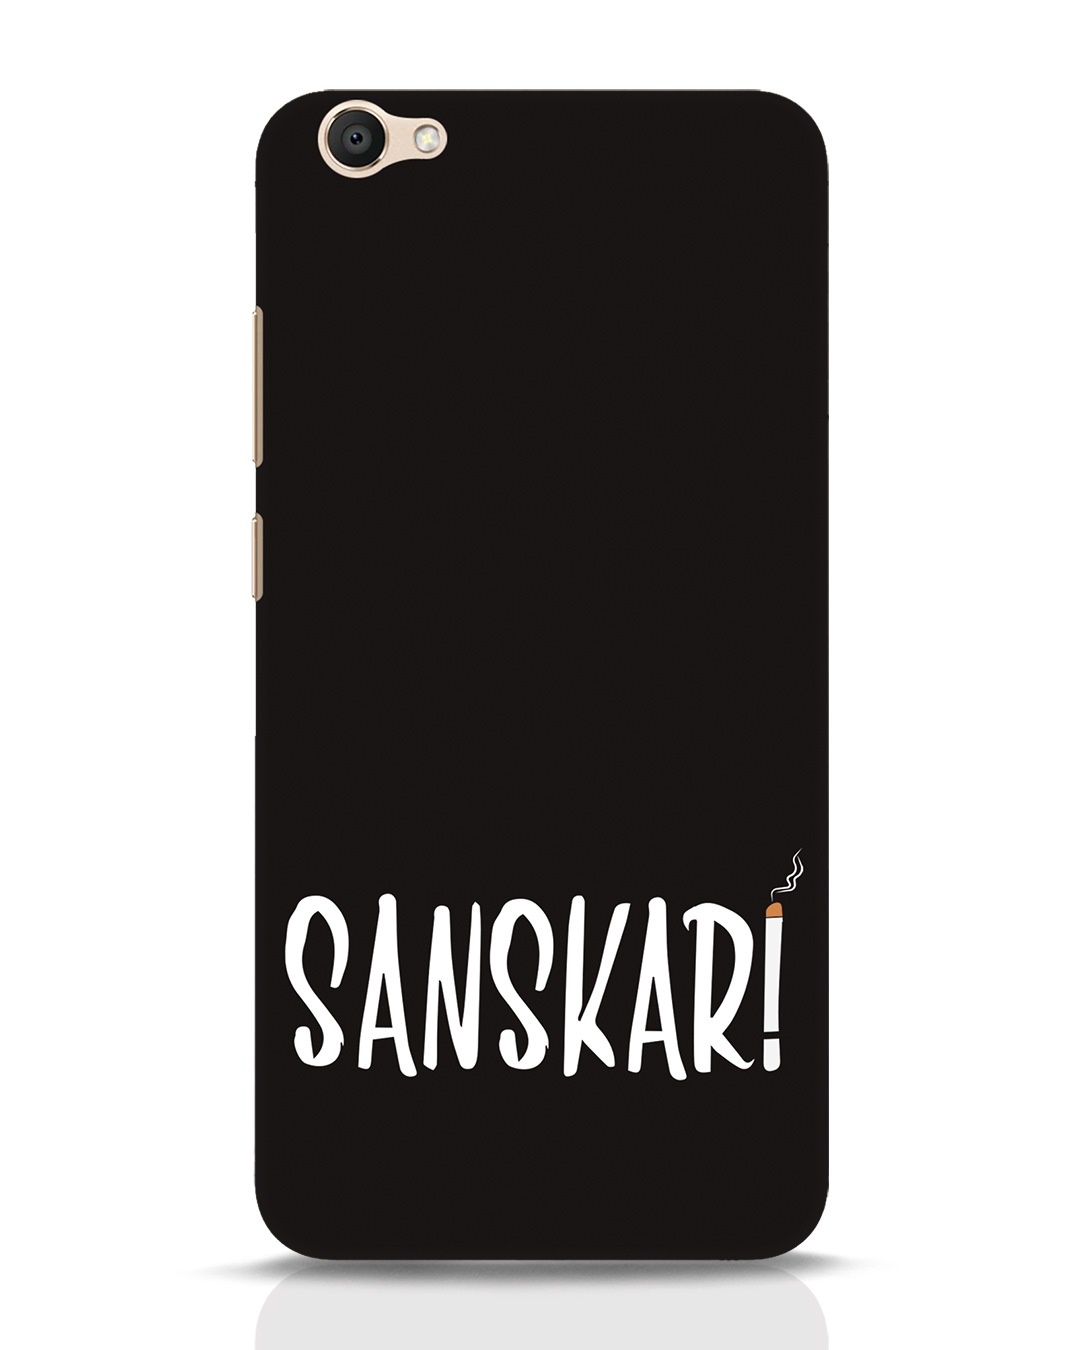 Sanskari Vivo V5 Mobile Cover Vivo V5 Mobile Covers Bewakoof.com